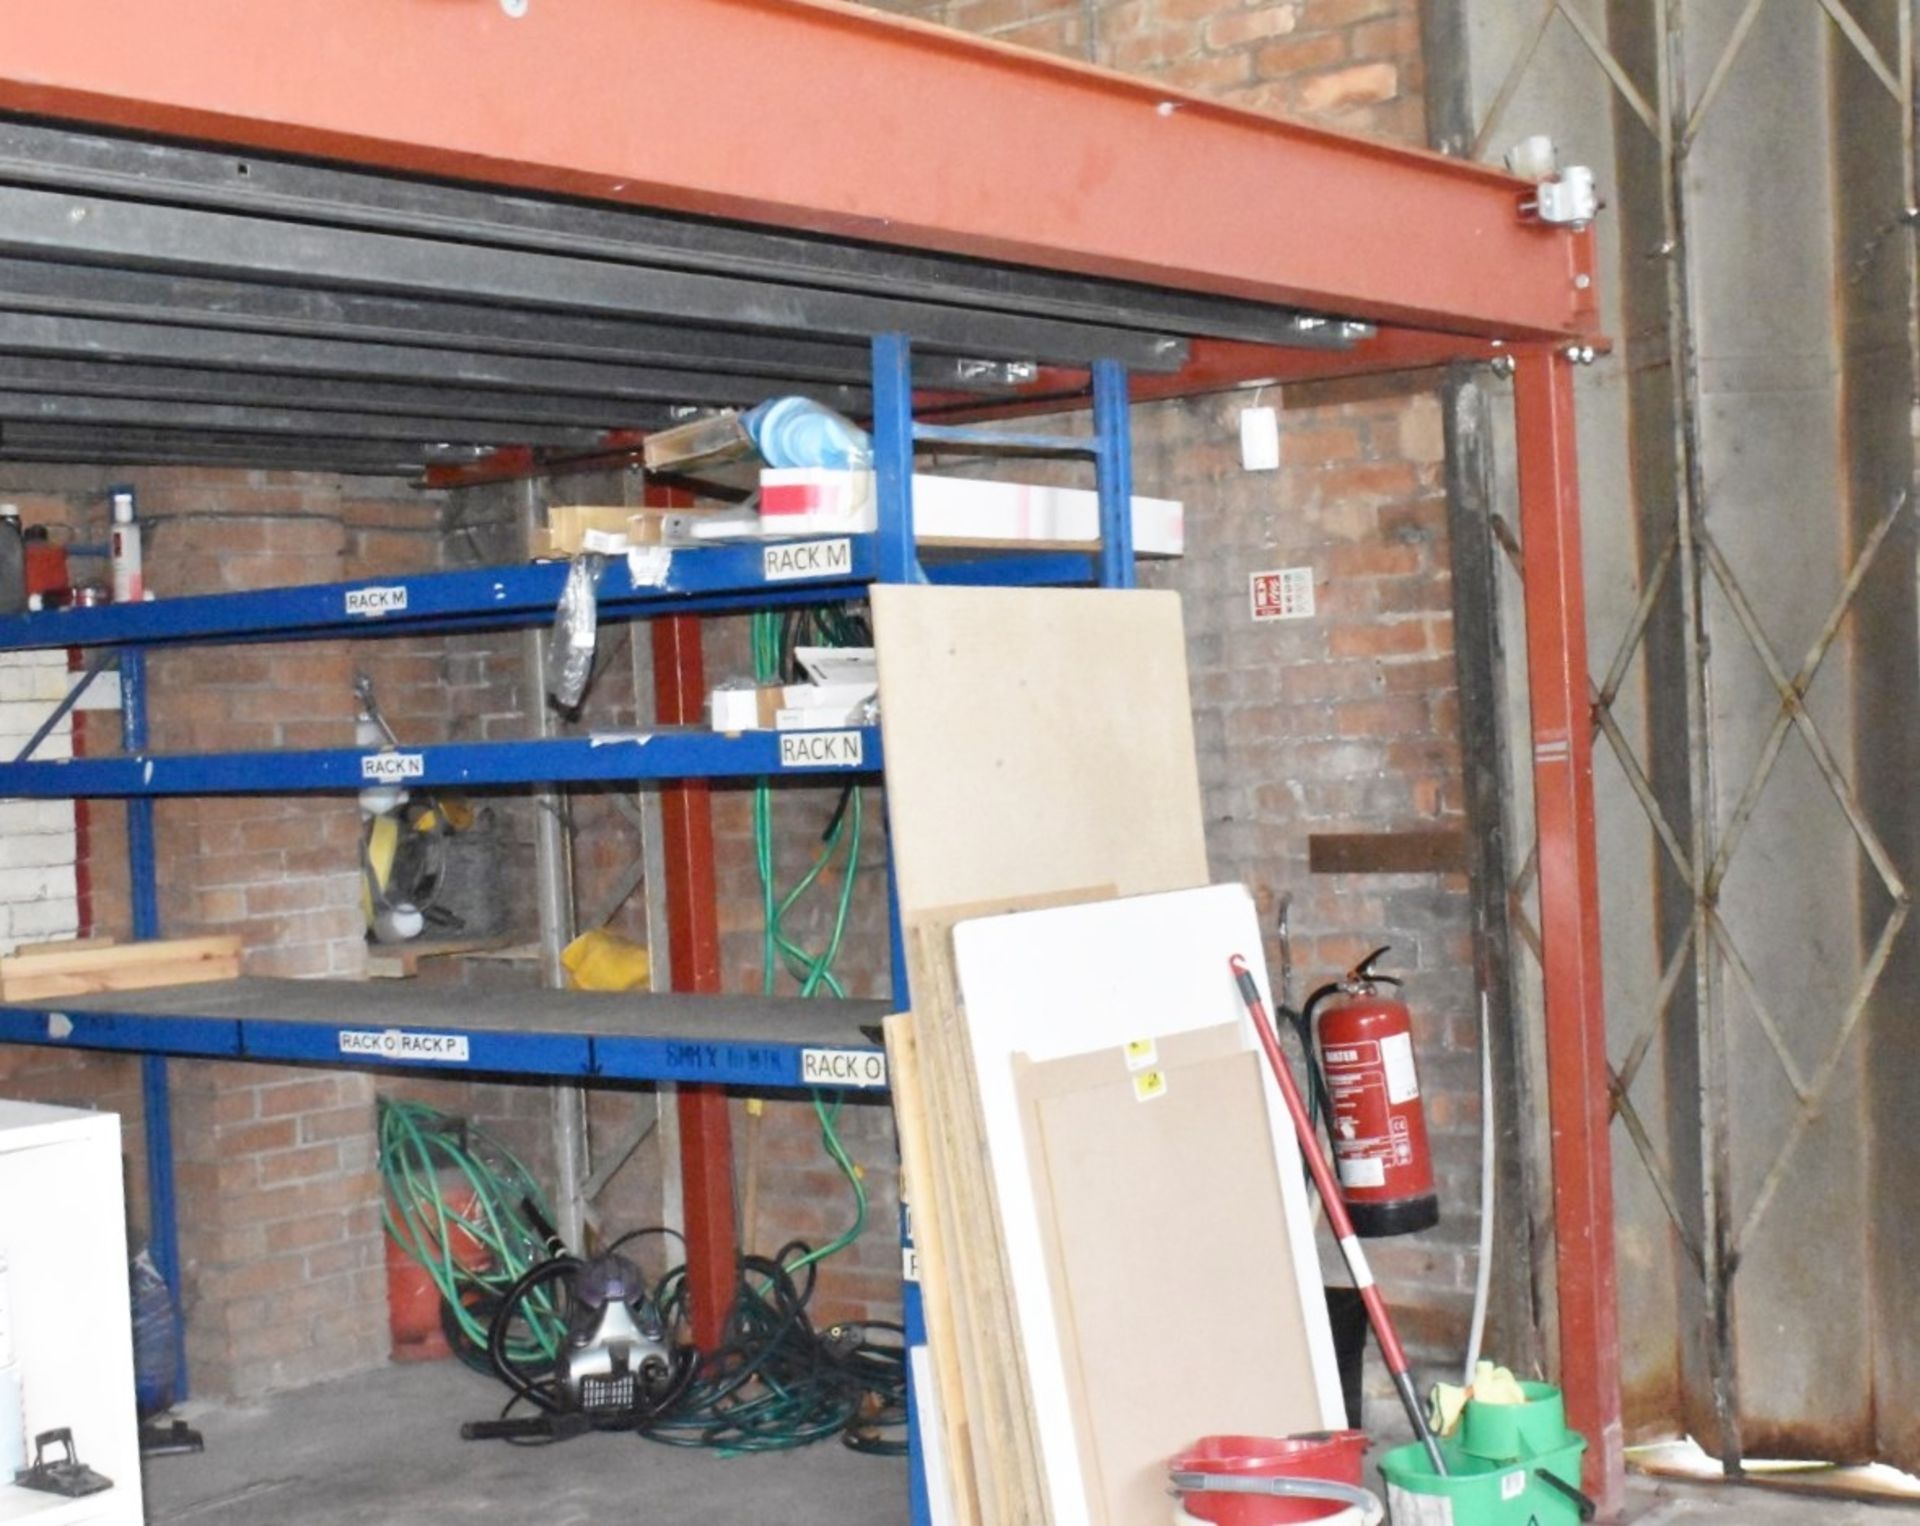 1 x Mezzanine Floor - Heavy Duty Steel Construction With Access Ladder - Size: W1000 x D325 cms - Image 18 of 18